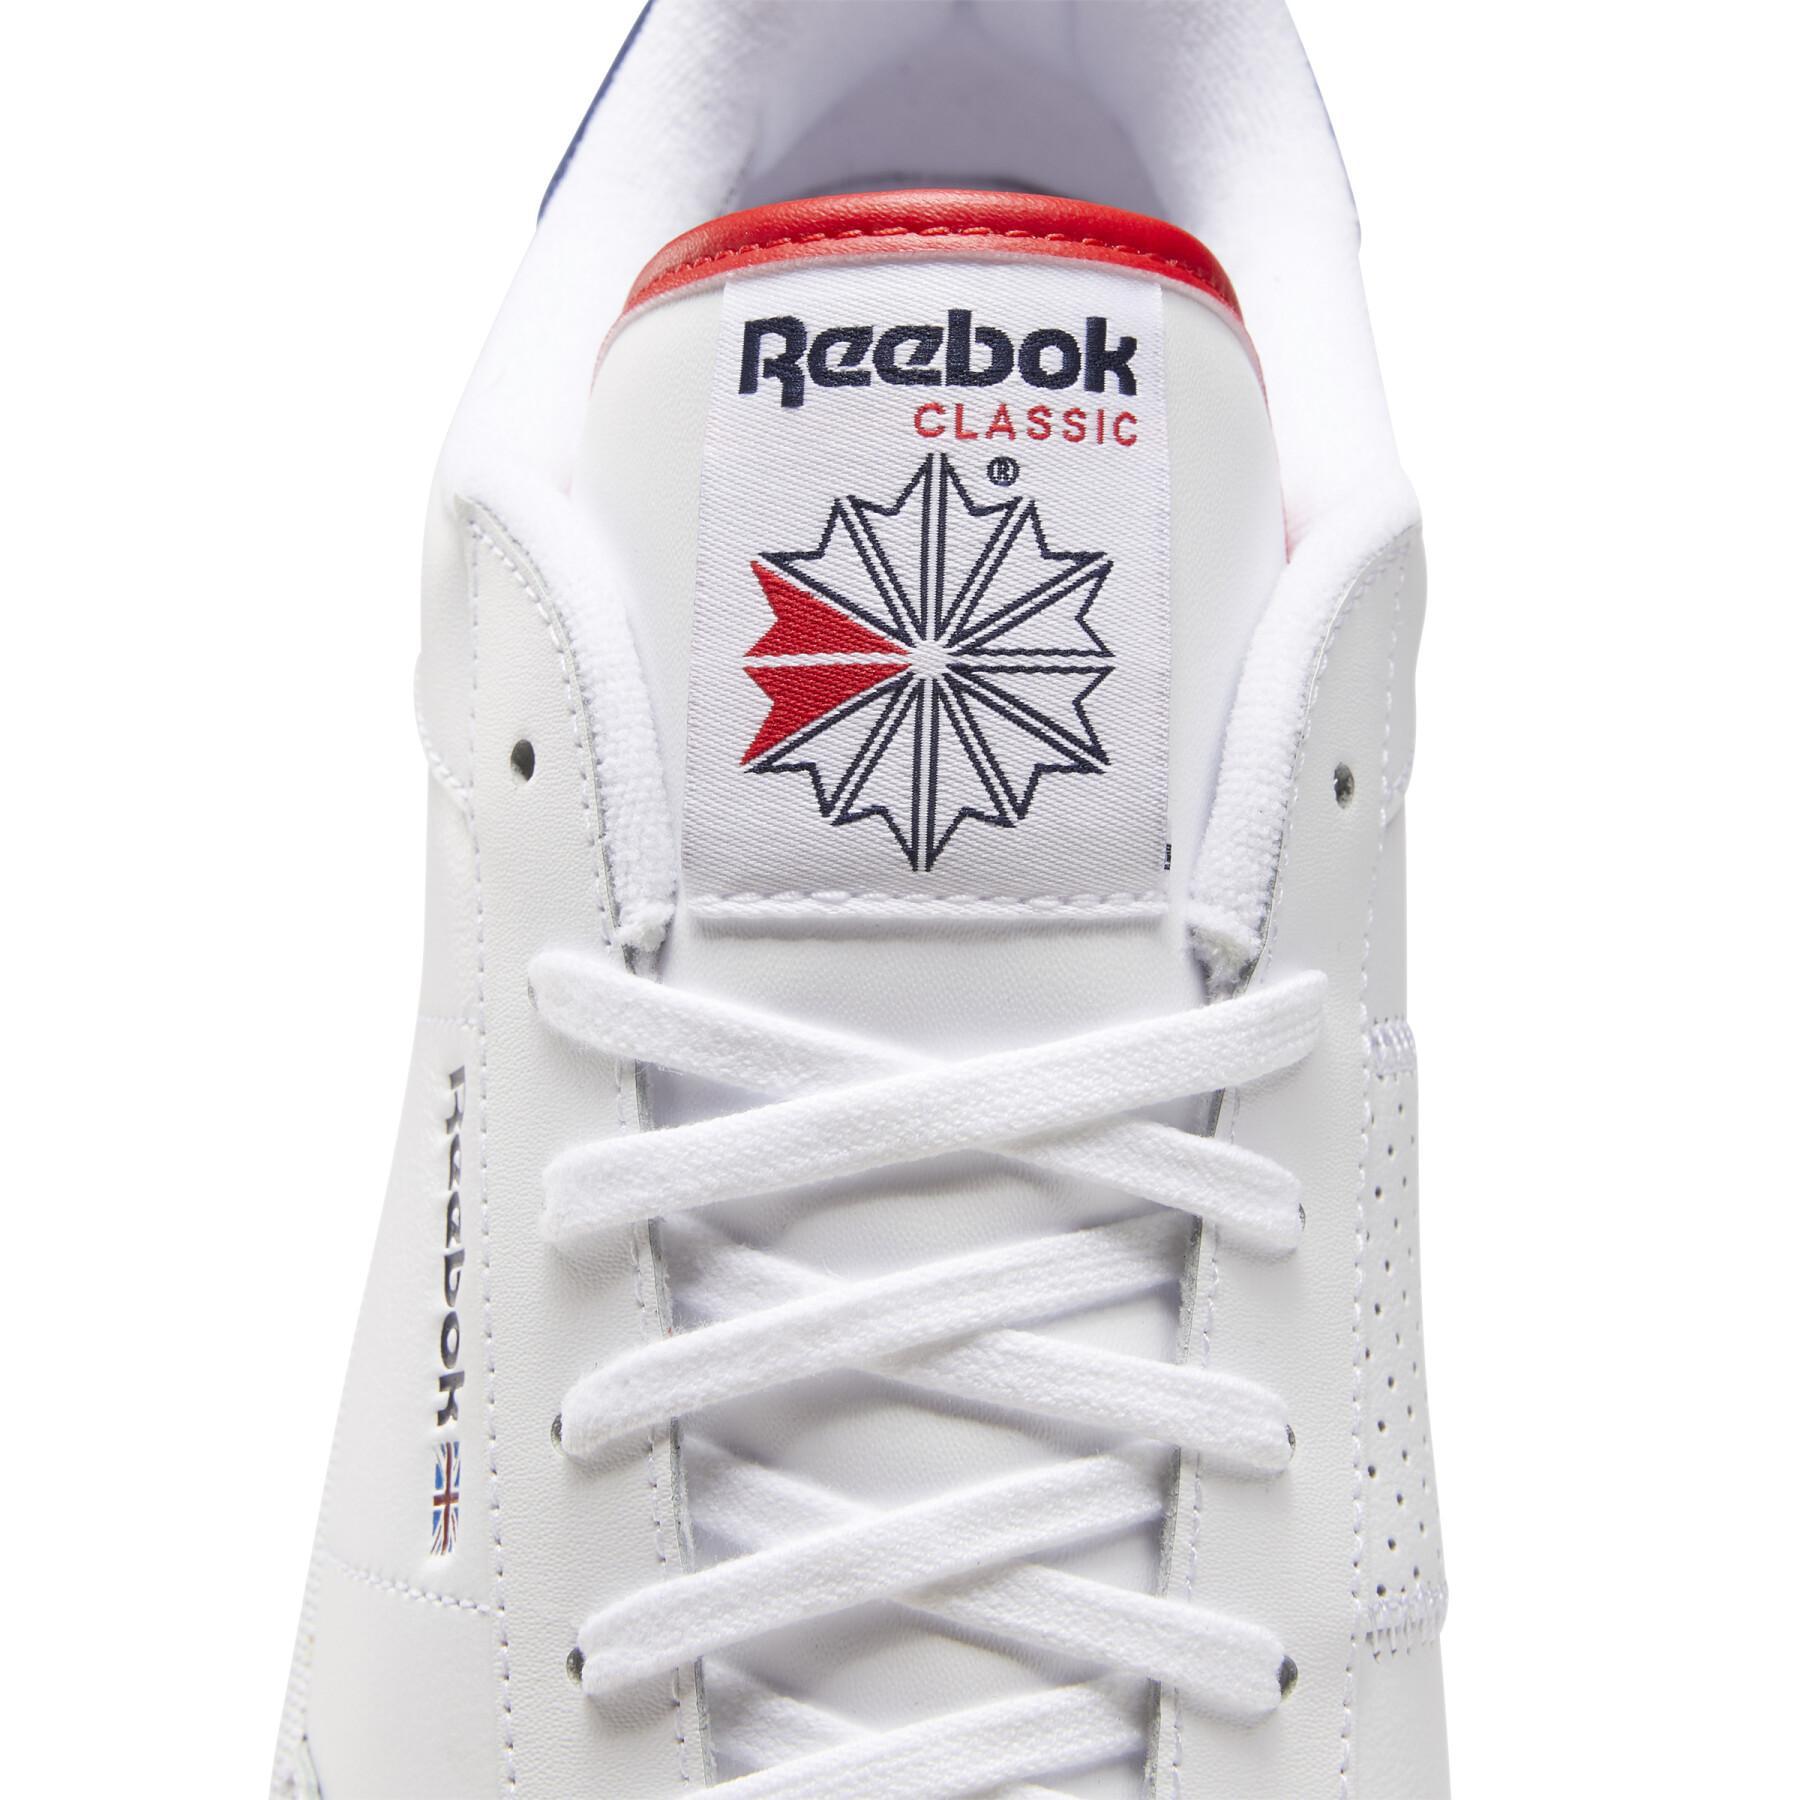 Schuhe Reebok Ad Court